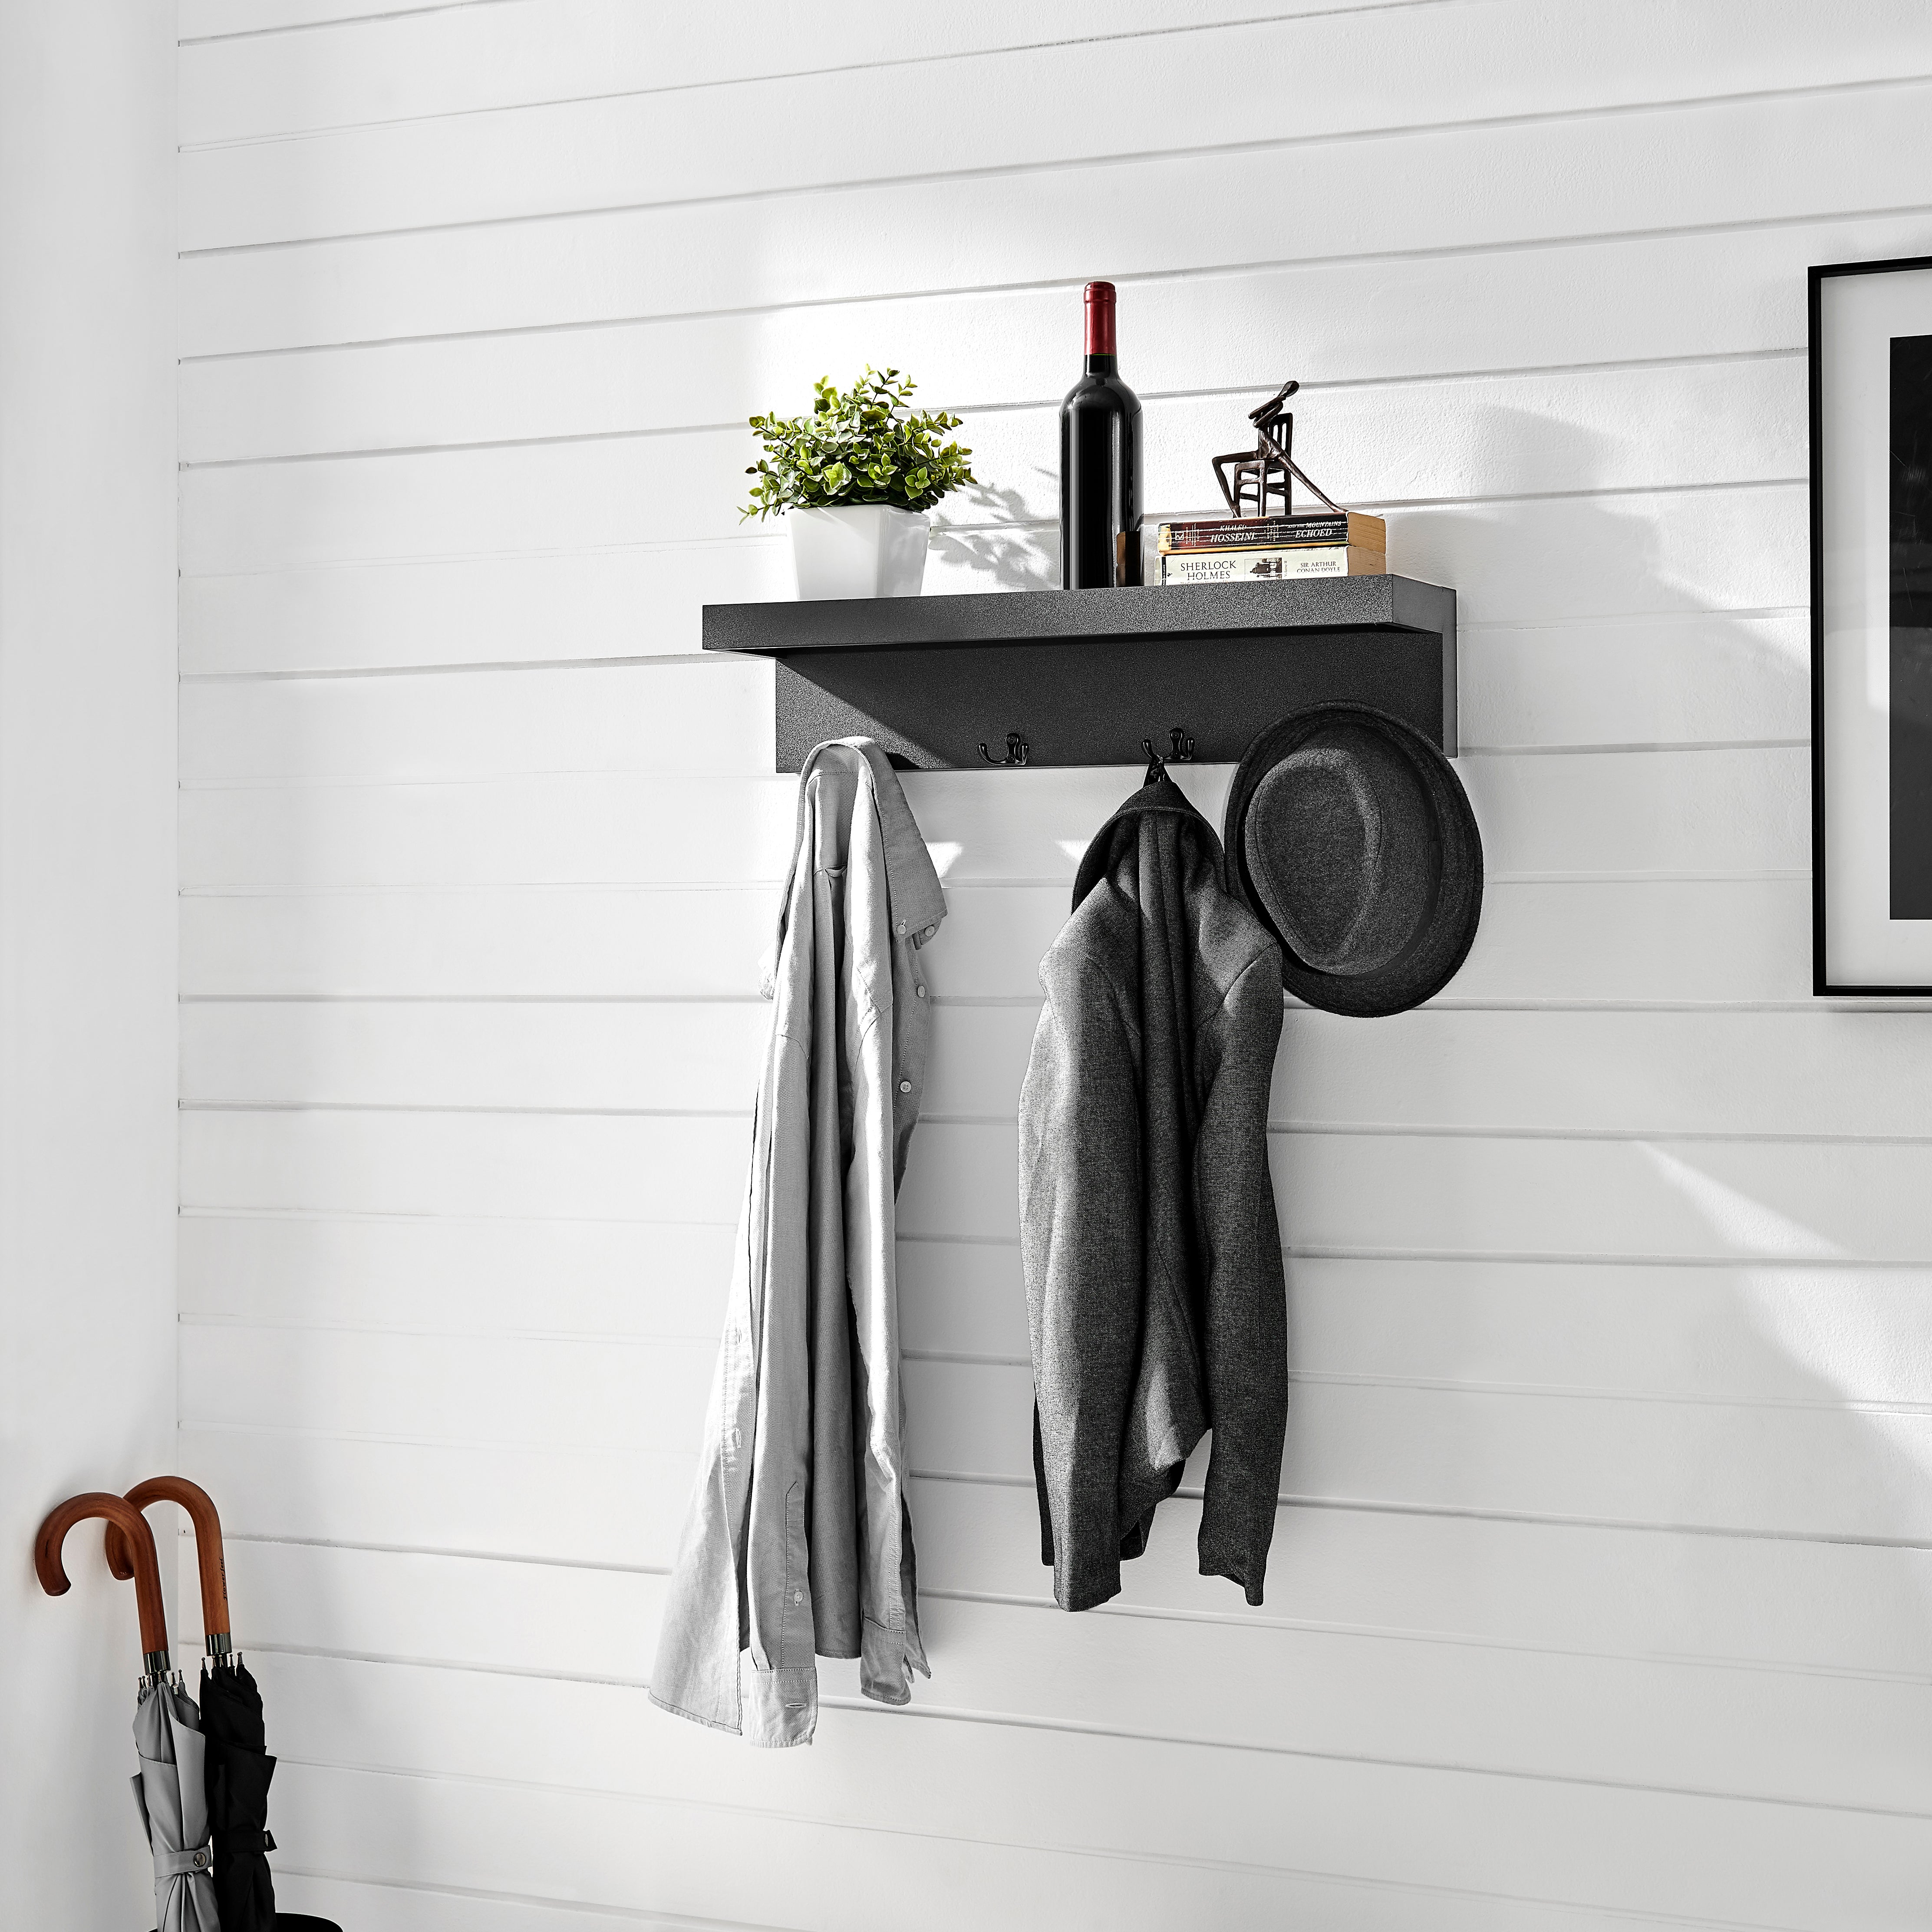 Danya B. Entryway Wall Coat Rack with Decorative Ledge Shelf and Hooks - White